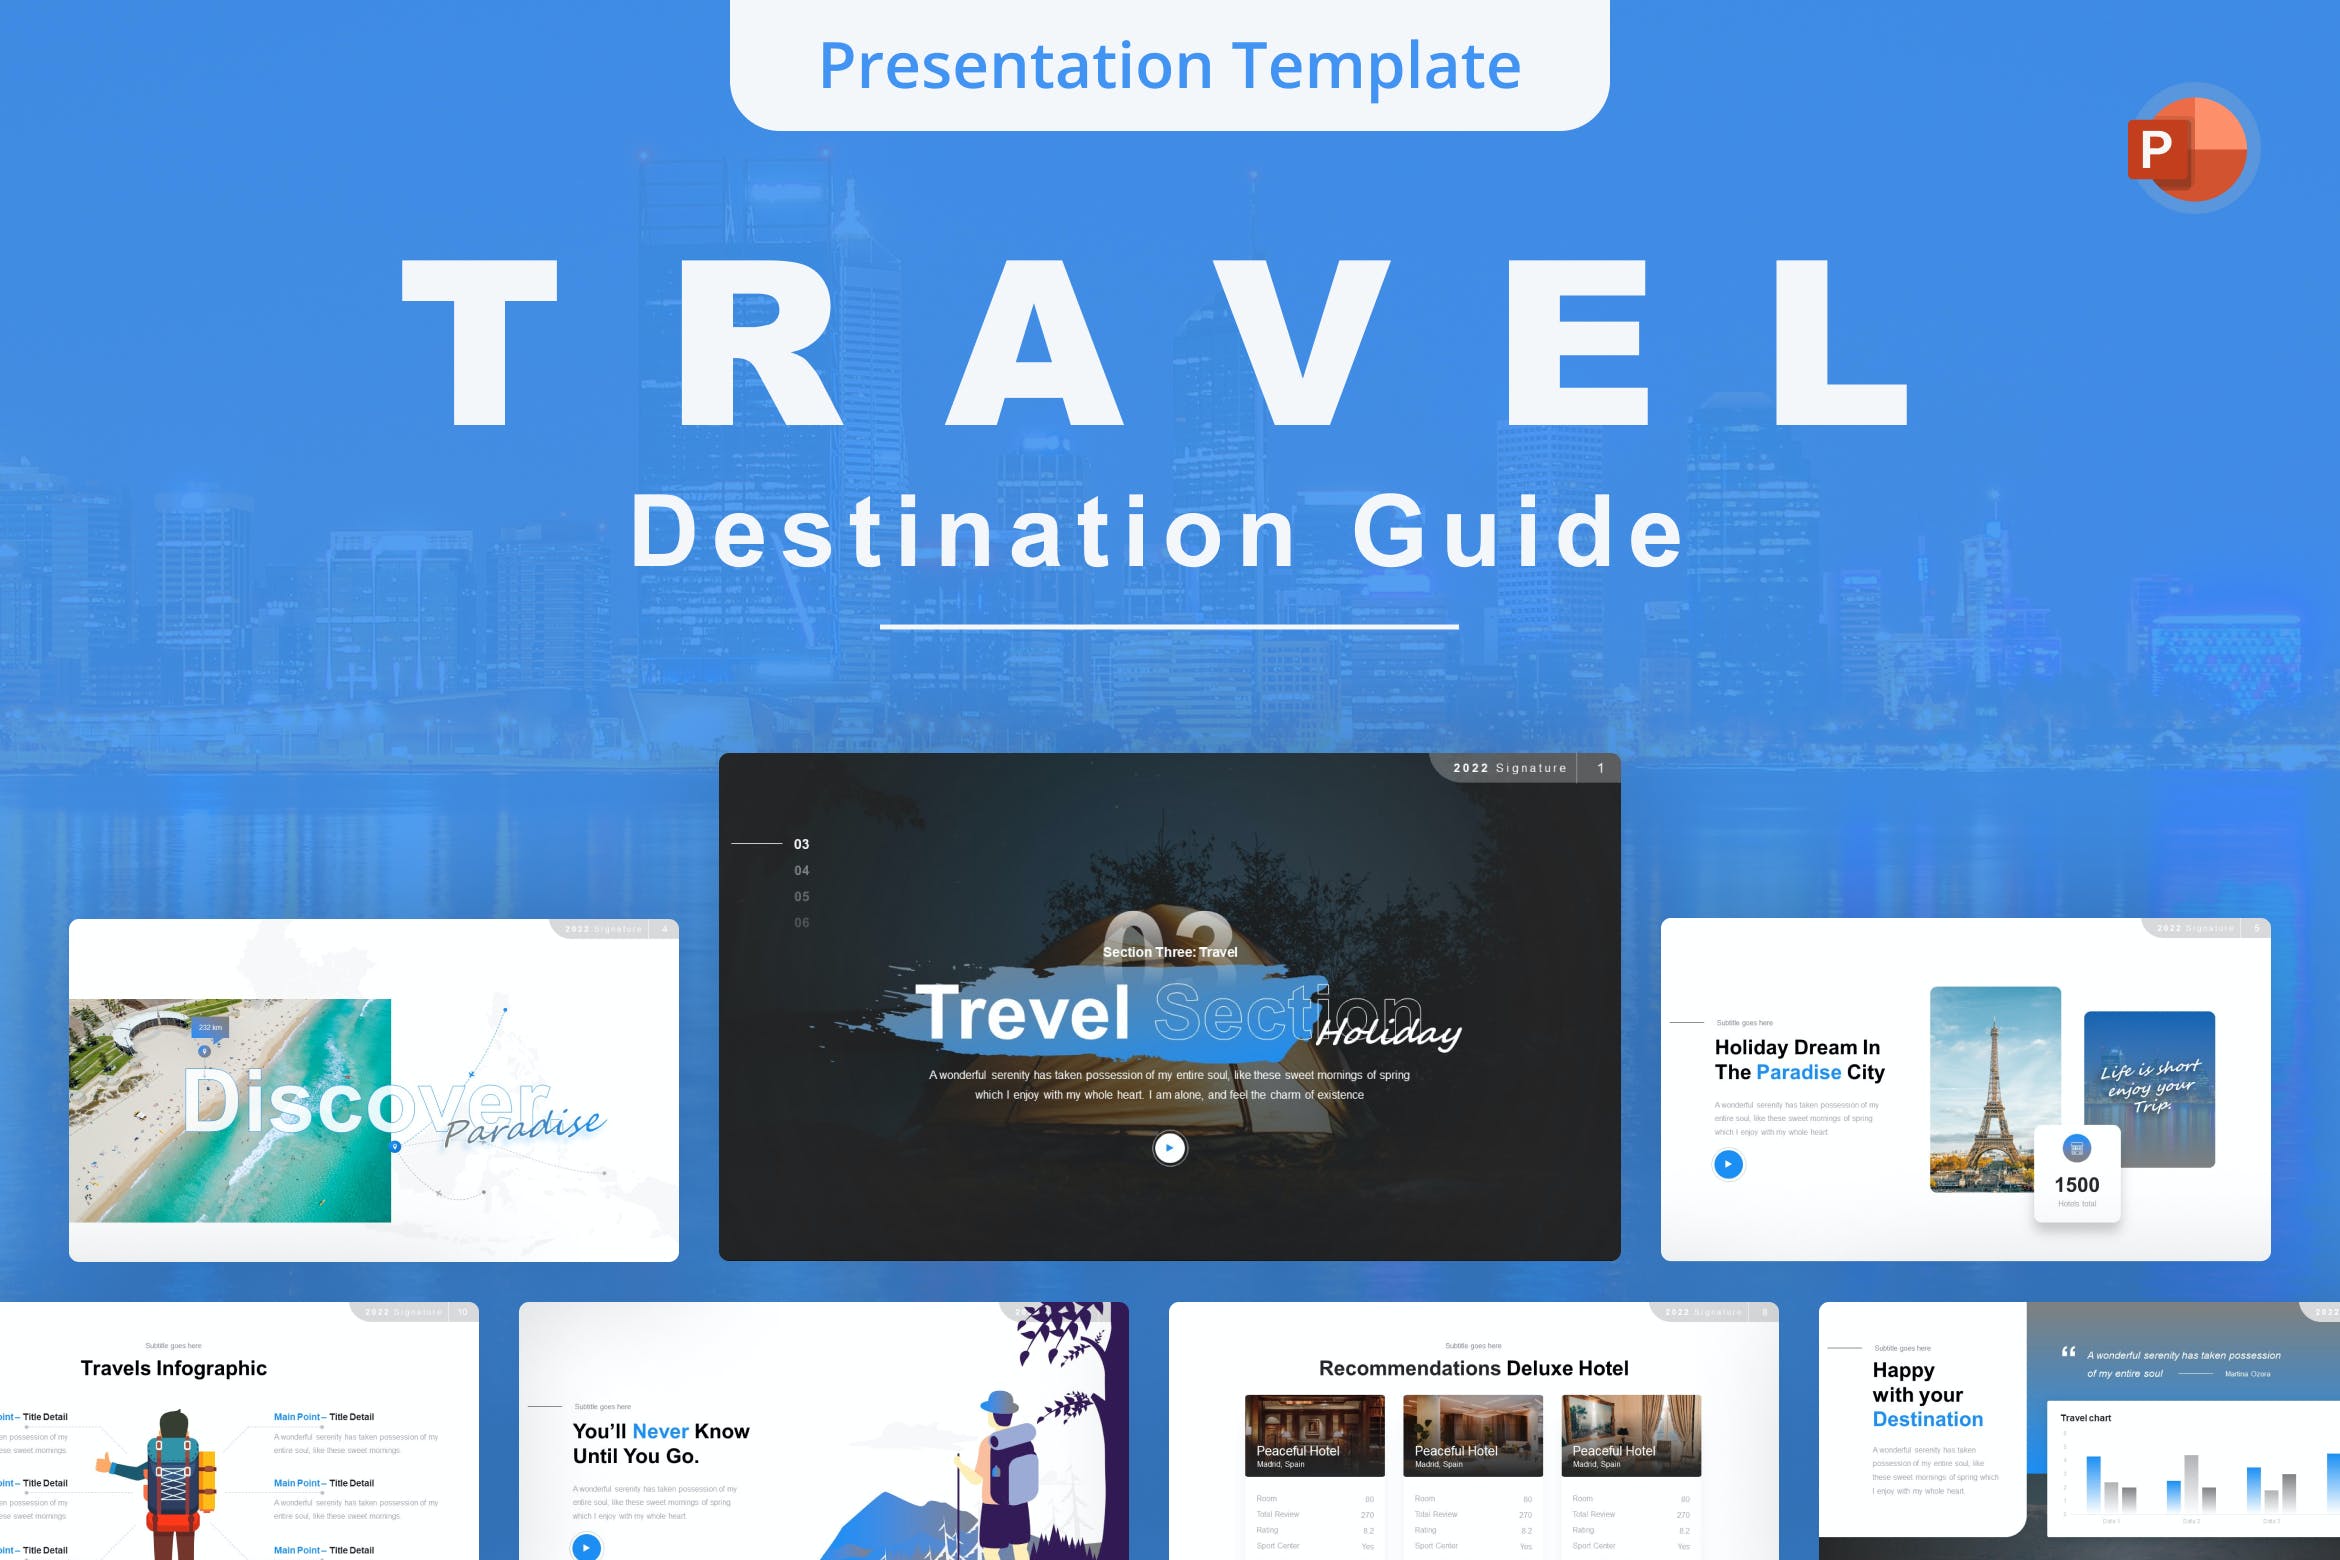 旅行目的地指南PPT幻灯片设计模板 Travel Destination Guide PowerPoint Template 幻灯图表 第1张